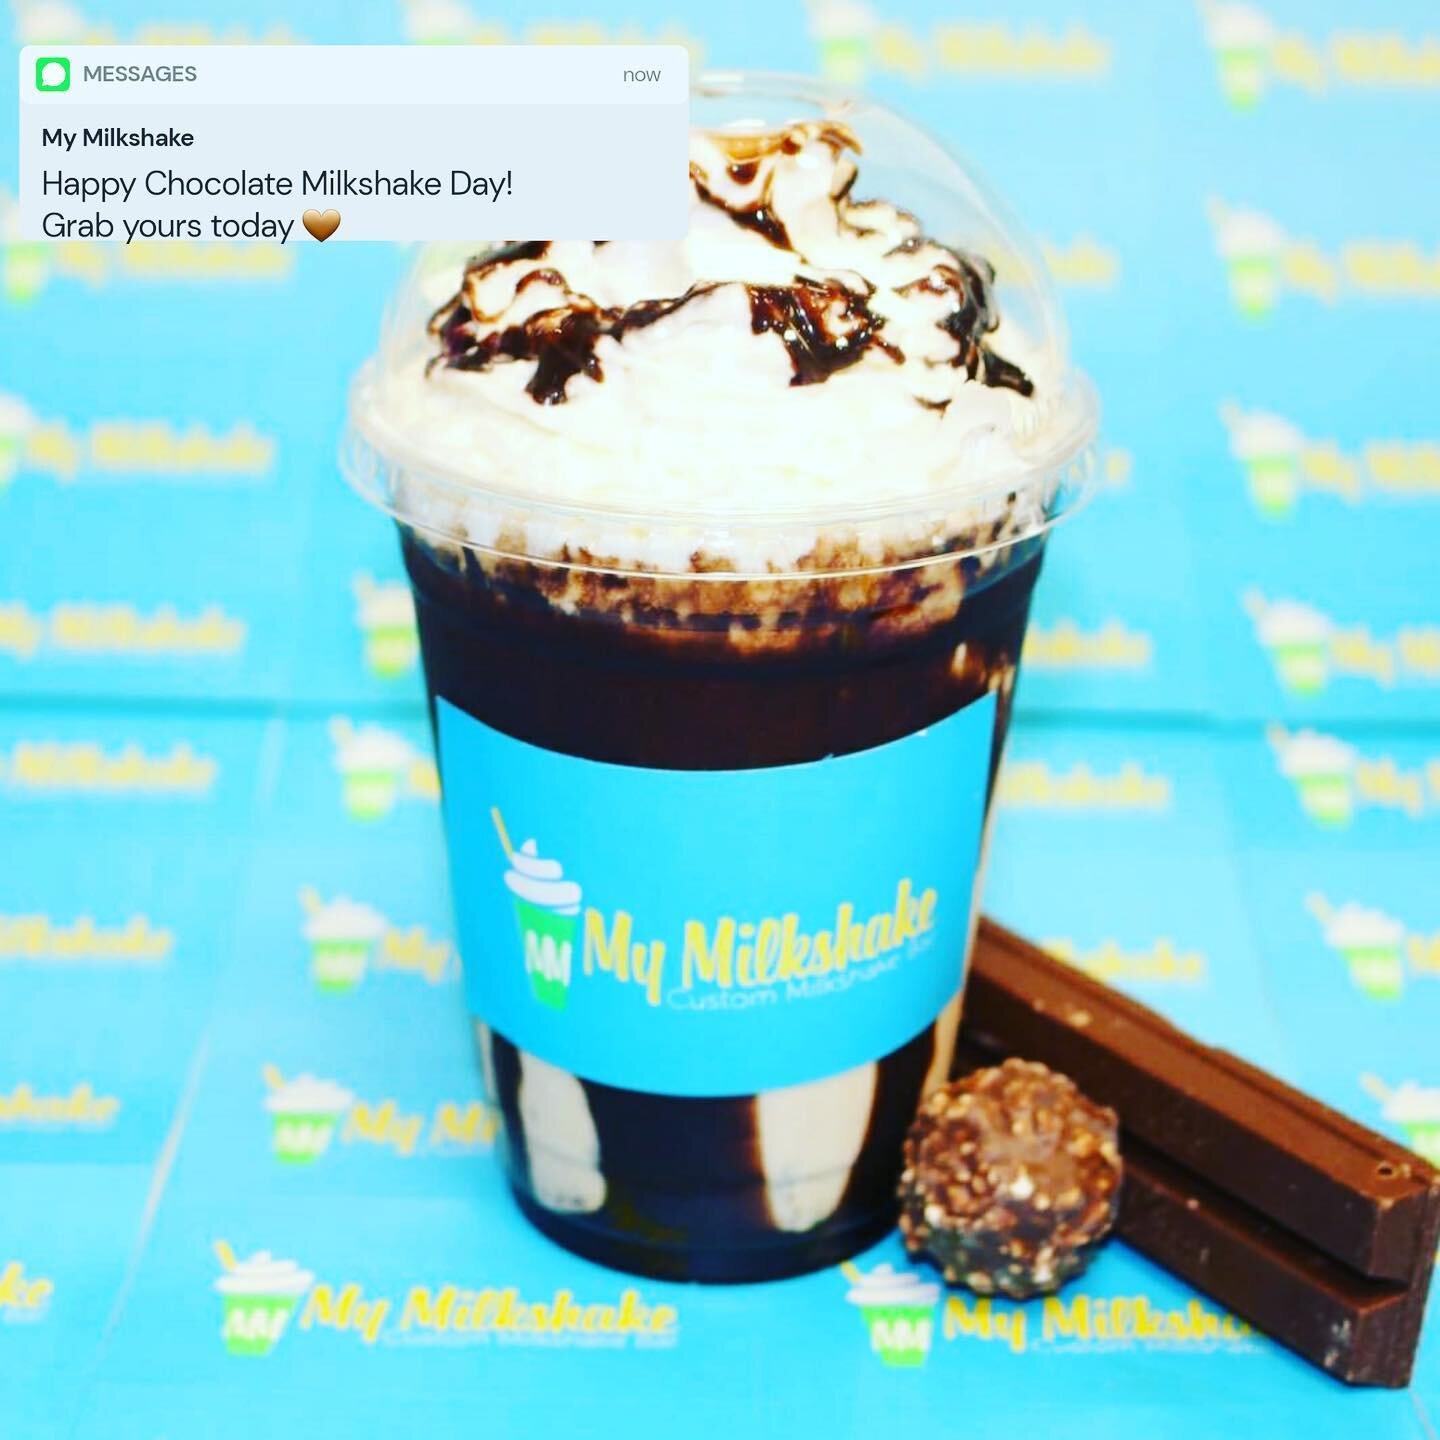 Happy Saturday and Happy National CHOCOLATE Milkshake Day! We're open till 1am tonight so come in and let's celebrate! 09/12 #NationalChocolateMilkshakeDay 

😋🍦🍰☕️🍭🍌🍒🍍🍓🍫🍪🍬🍟😋 #MyMilkshakeSJ #MyMilkshakeDowntown #151S2ndStreet #MyMilkshake